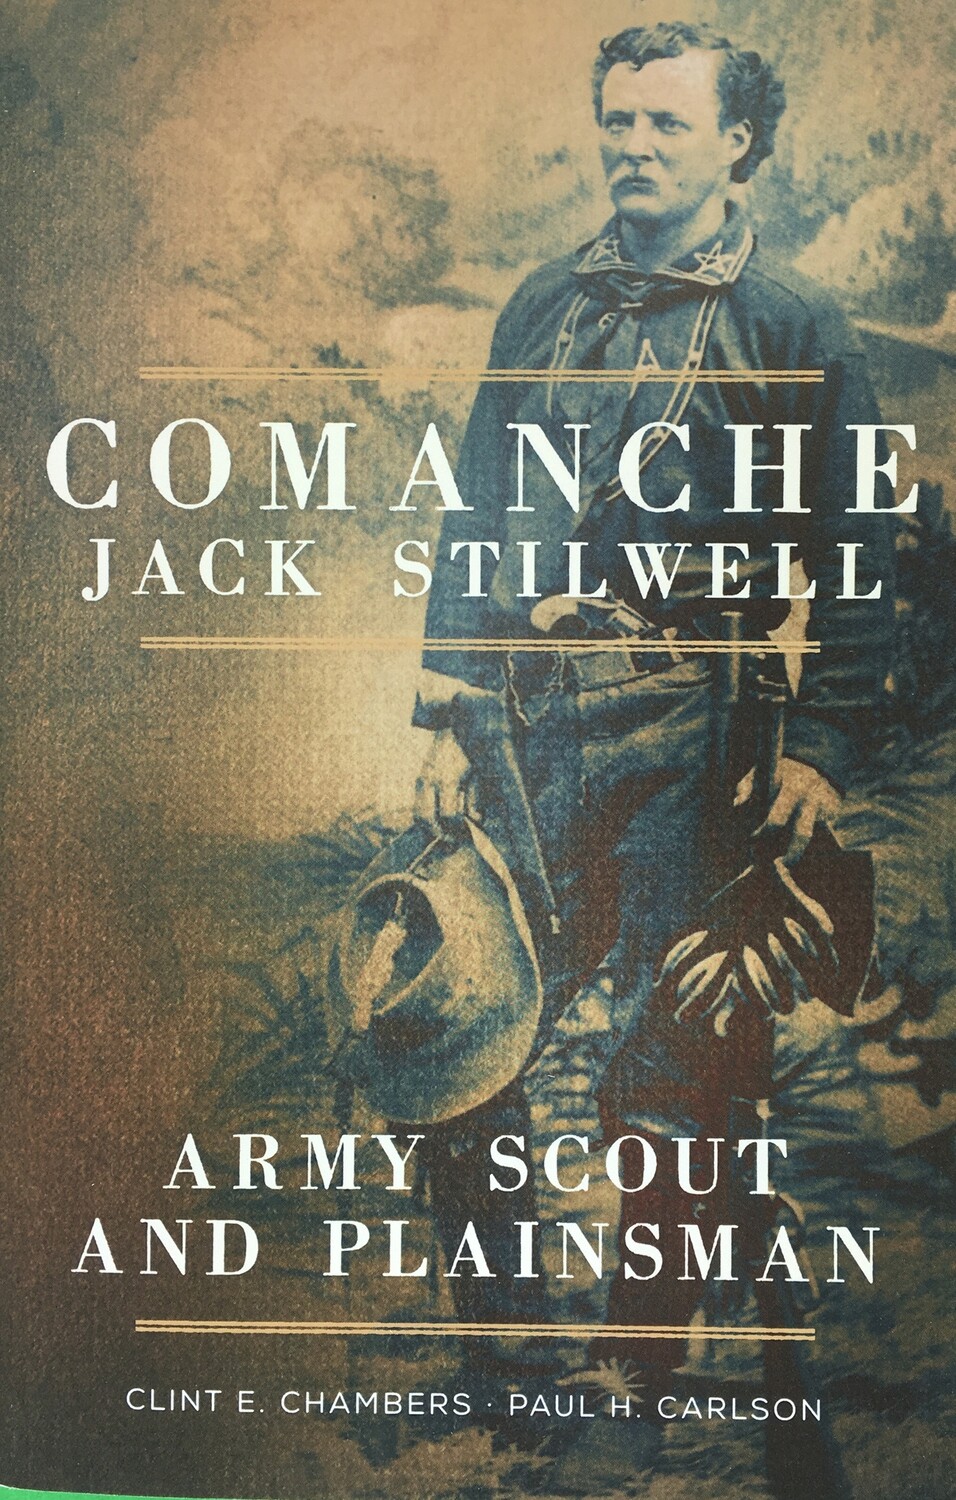 Comanche Jack Stillwell